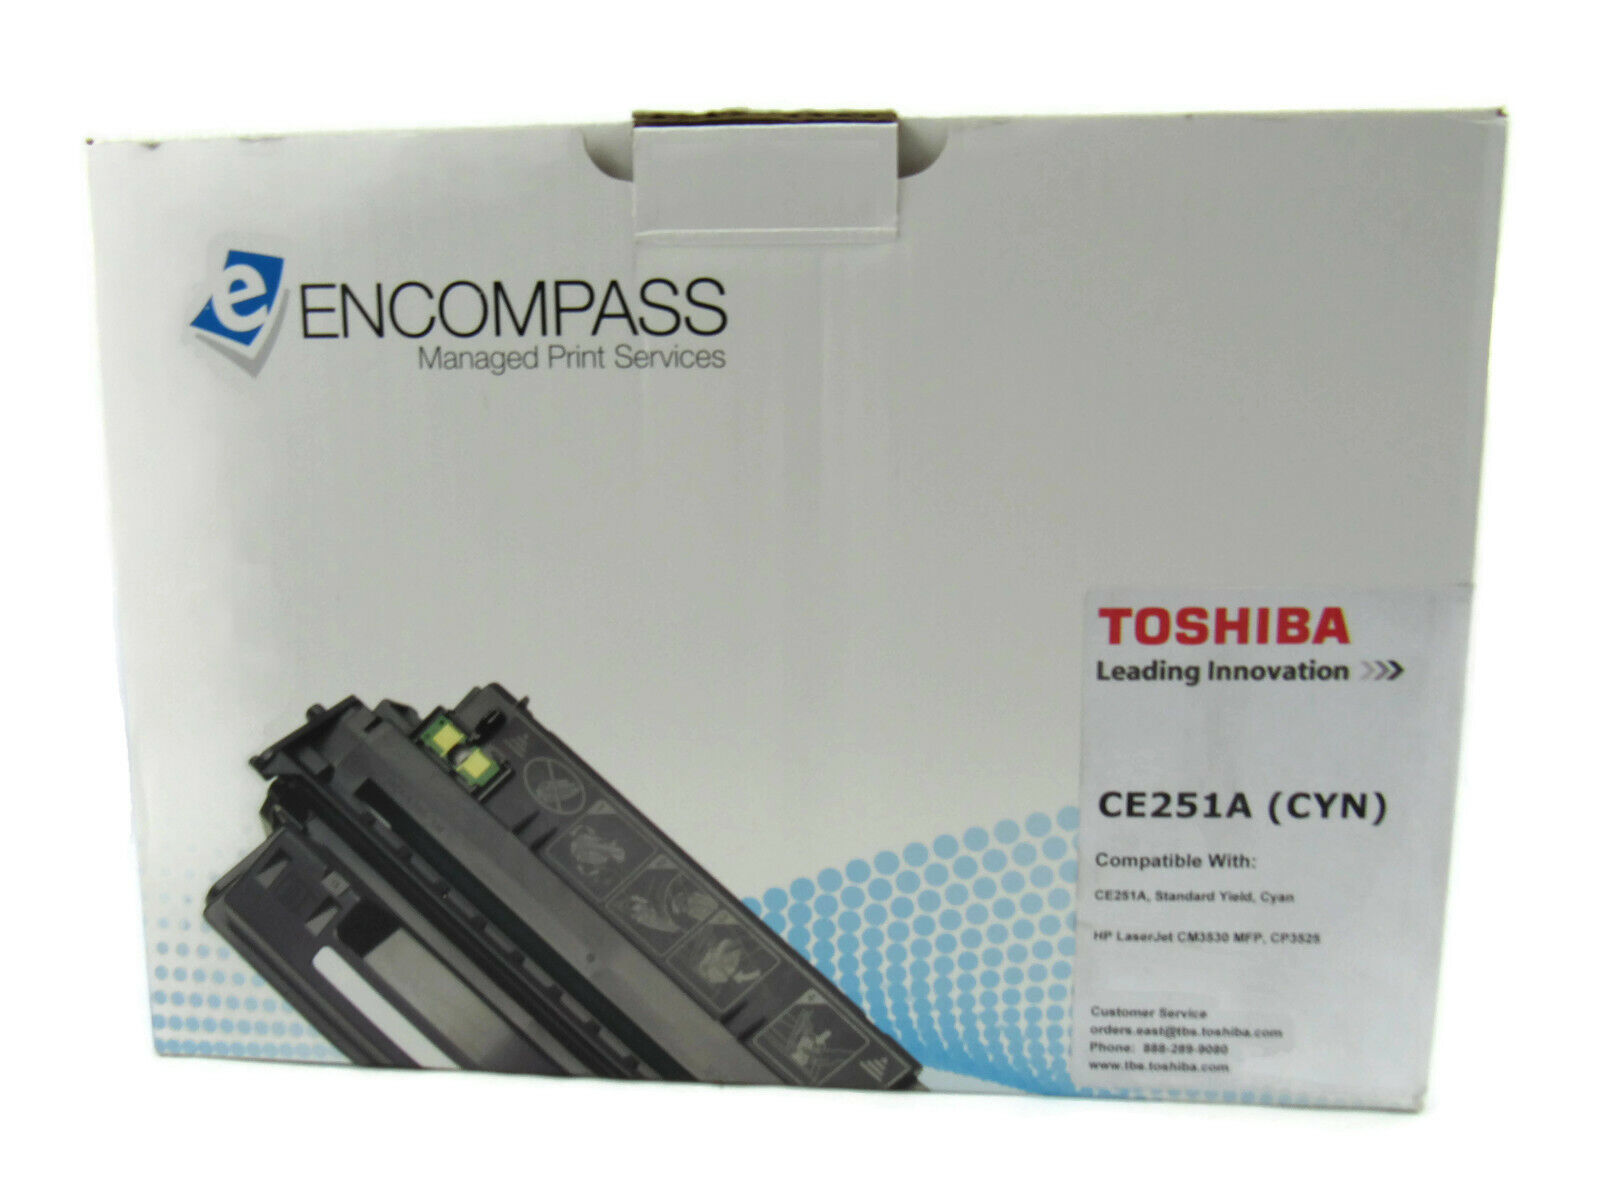 Encompass Toner Cartridge CE251A (CYN) for HP LaserJet  CM3530 MFP & CP3525 New